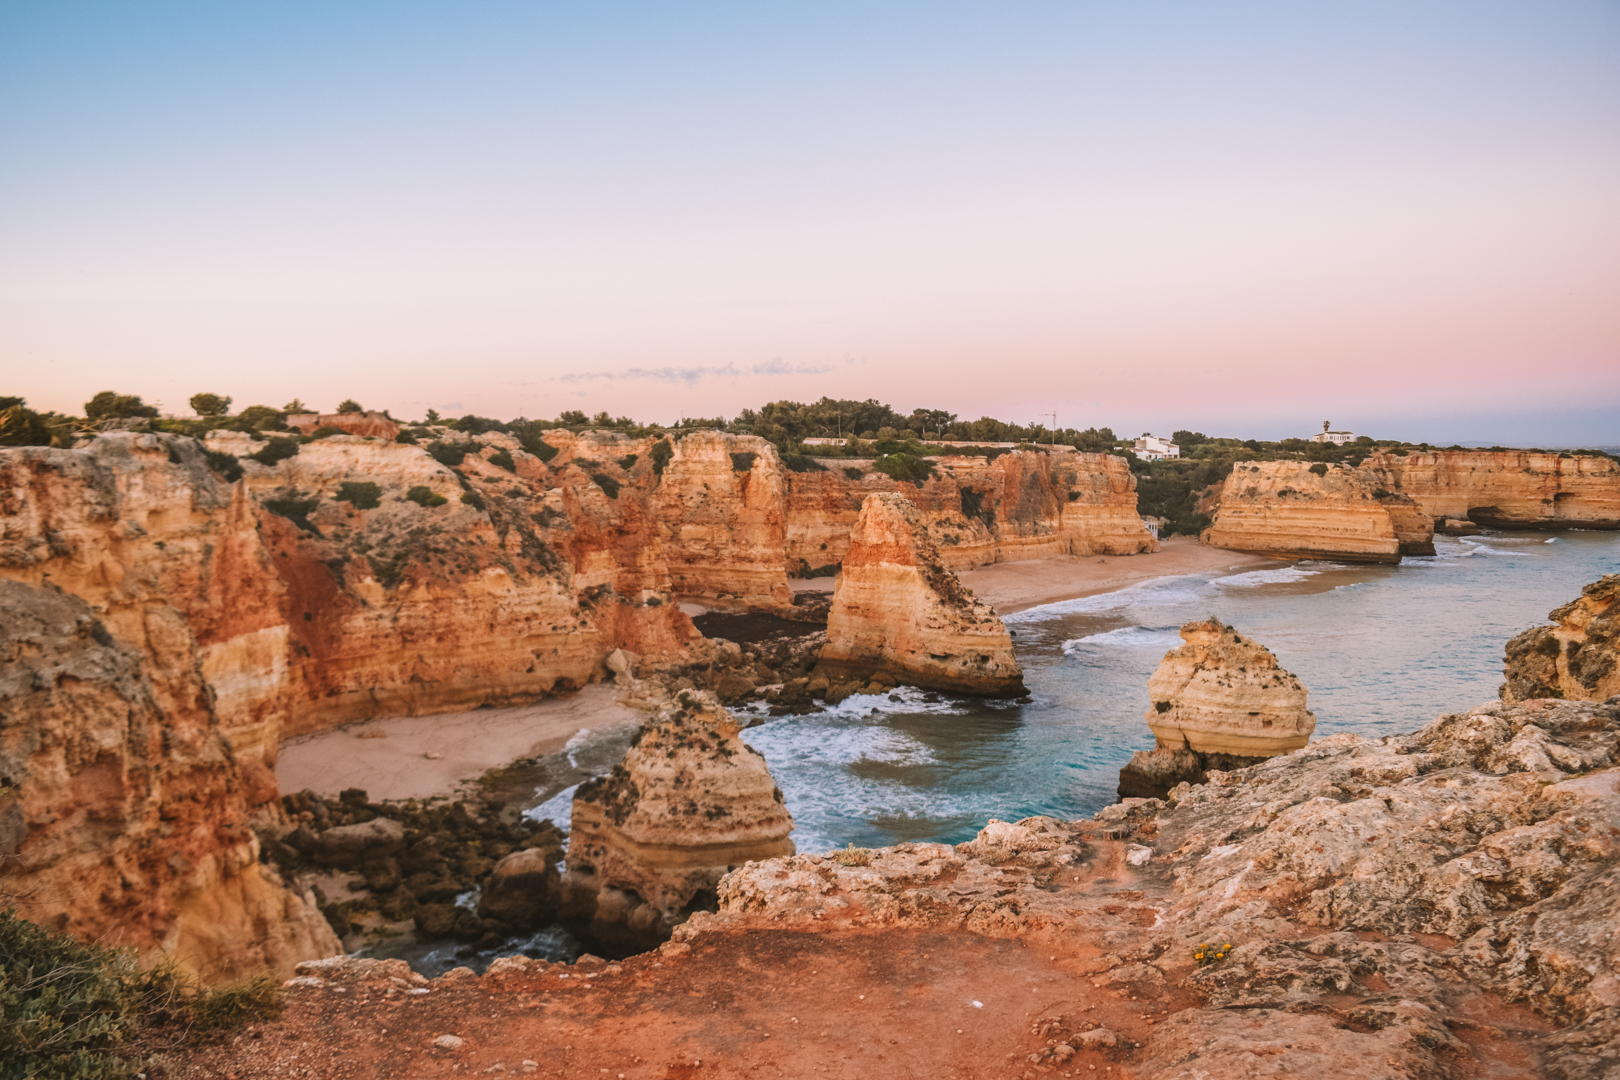 Top 10 spots to visit in the Algarve, Portugal